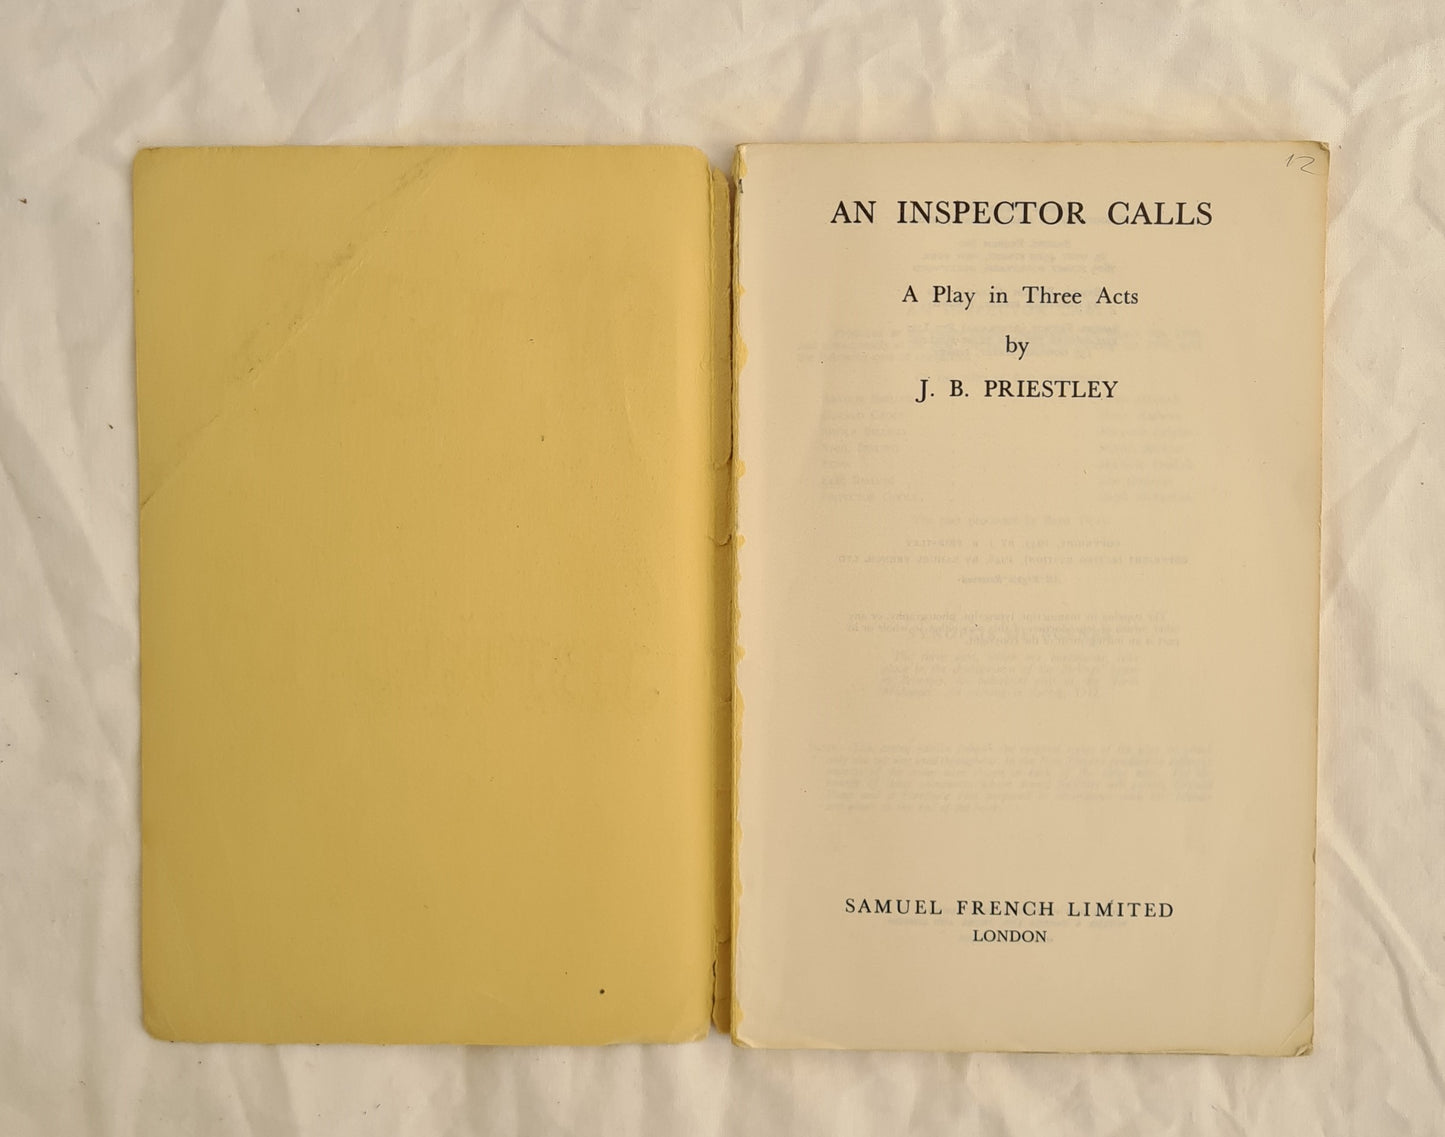 An Inspector Calls by J. B. Priestley